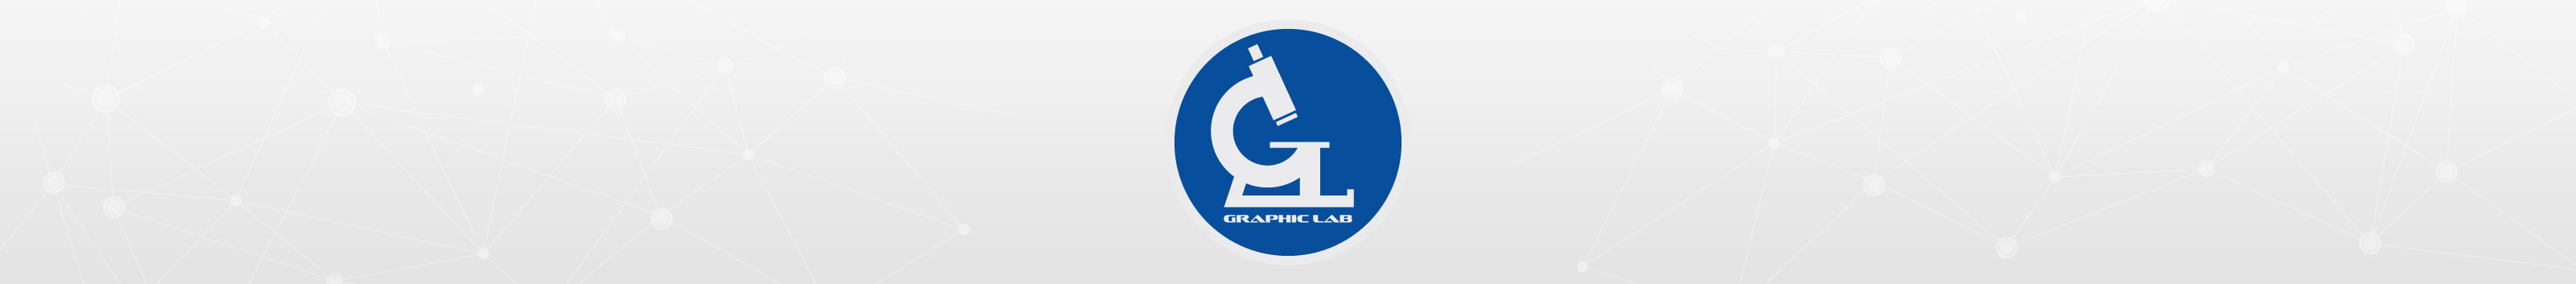 Graphic LAB Malaysia's profile banner